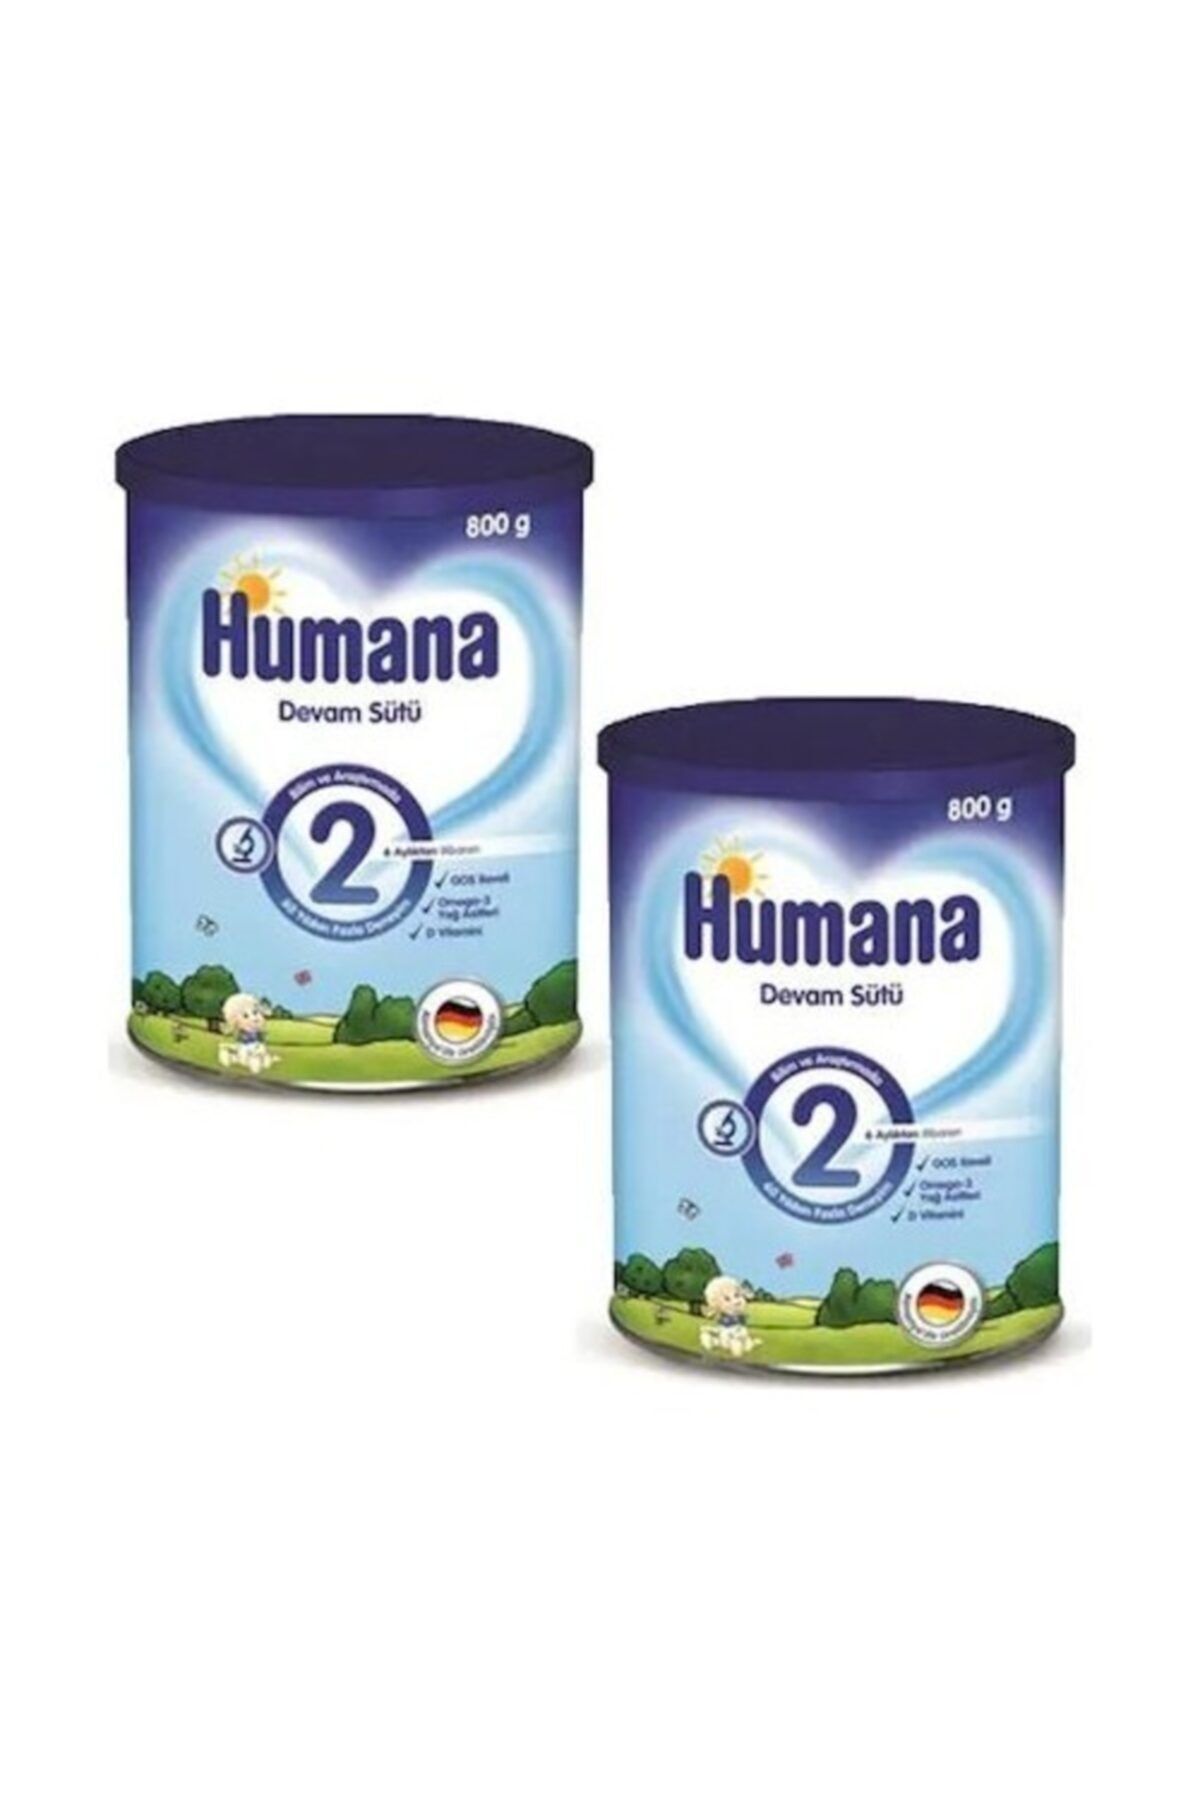 Humana Devam Sütü 2 Numara 800 Gr * 2 Adet